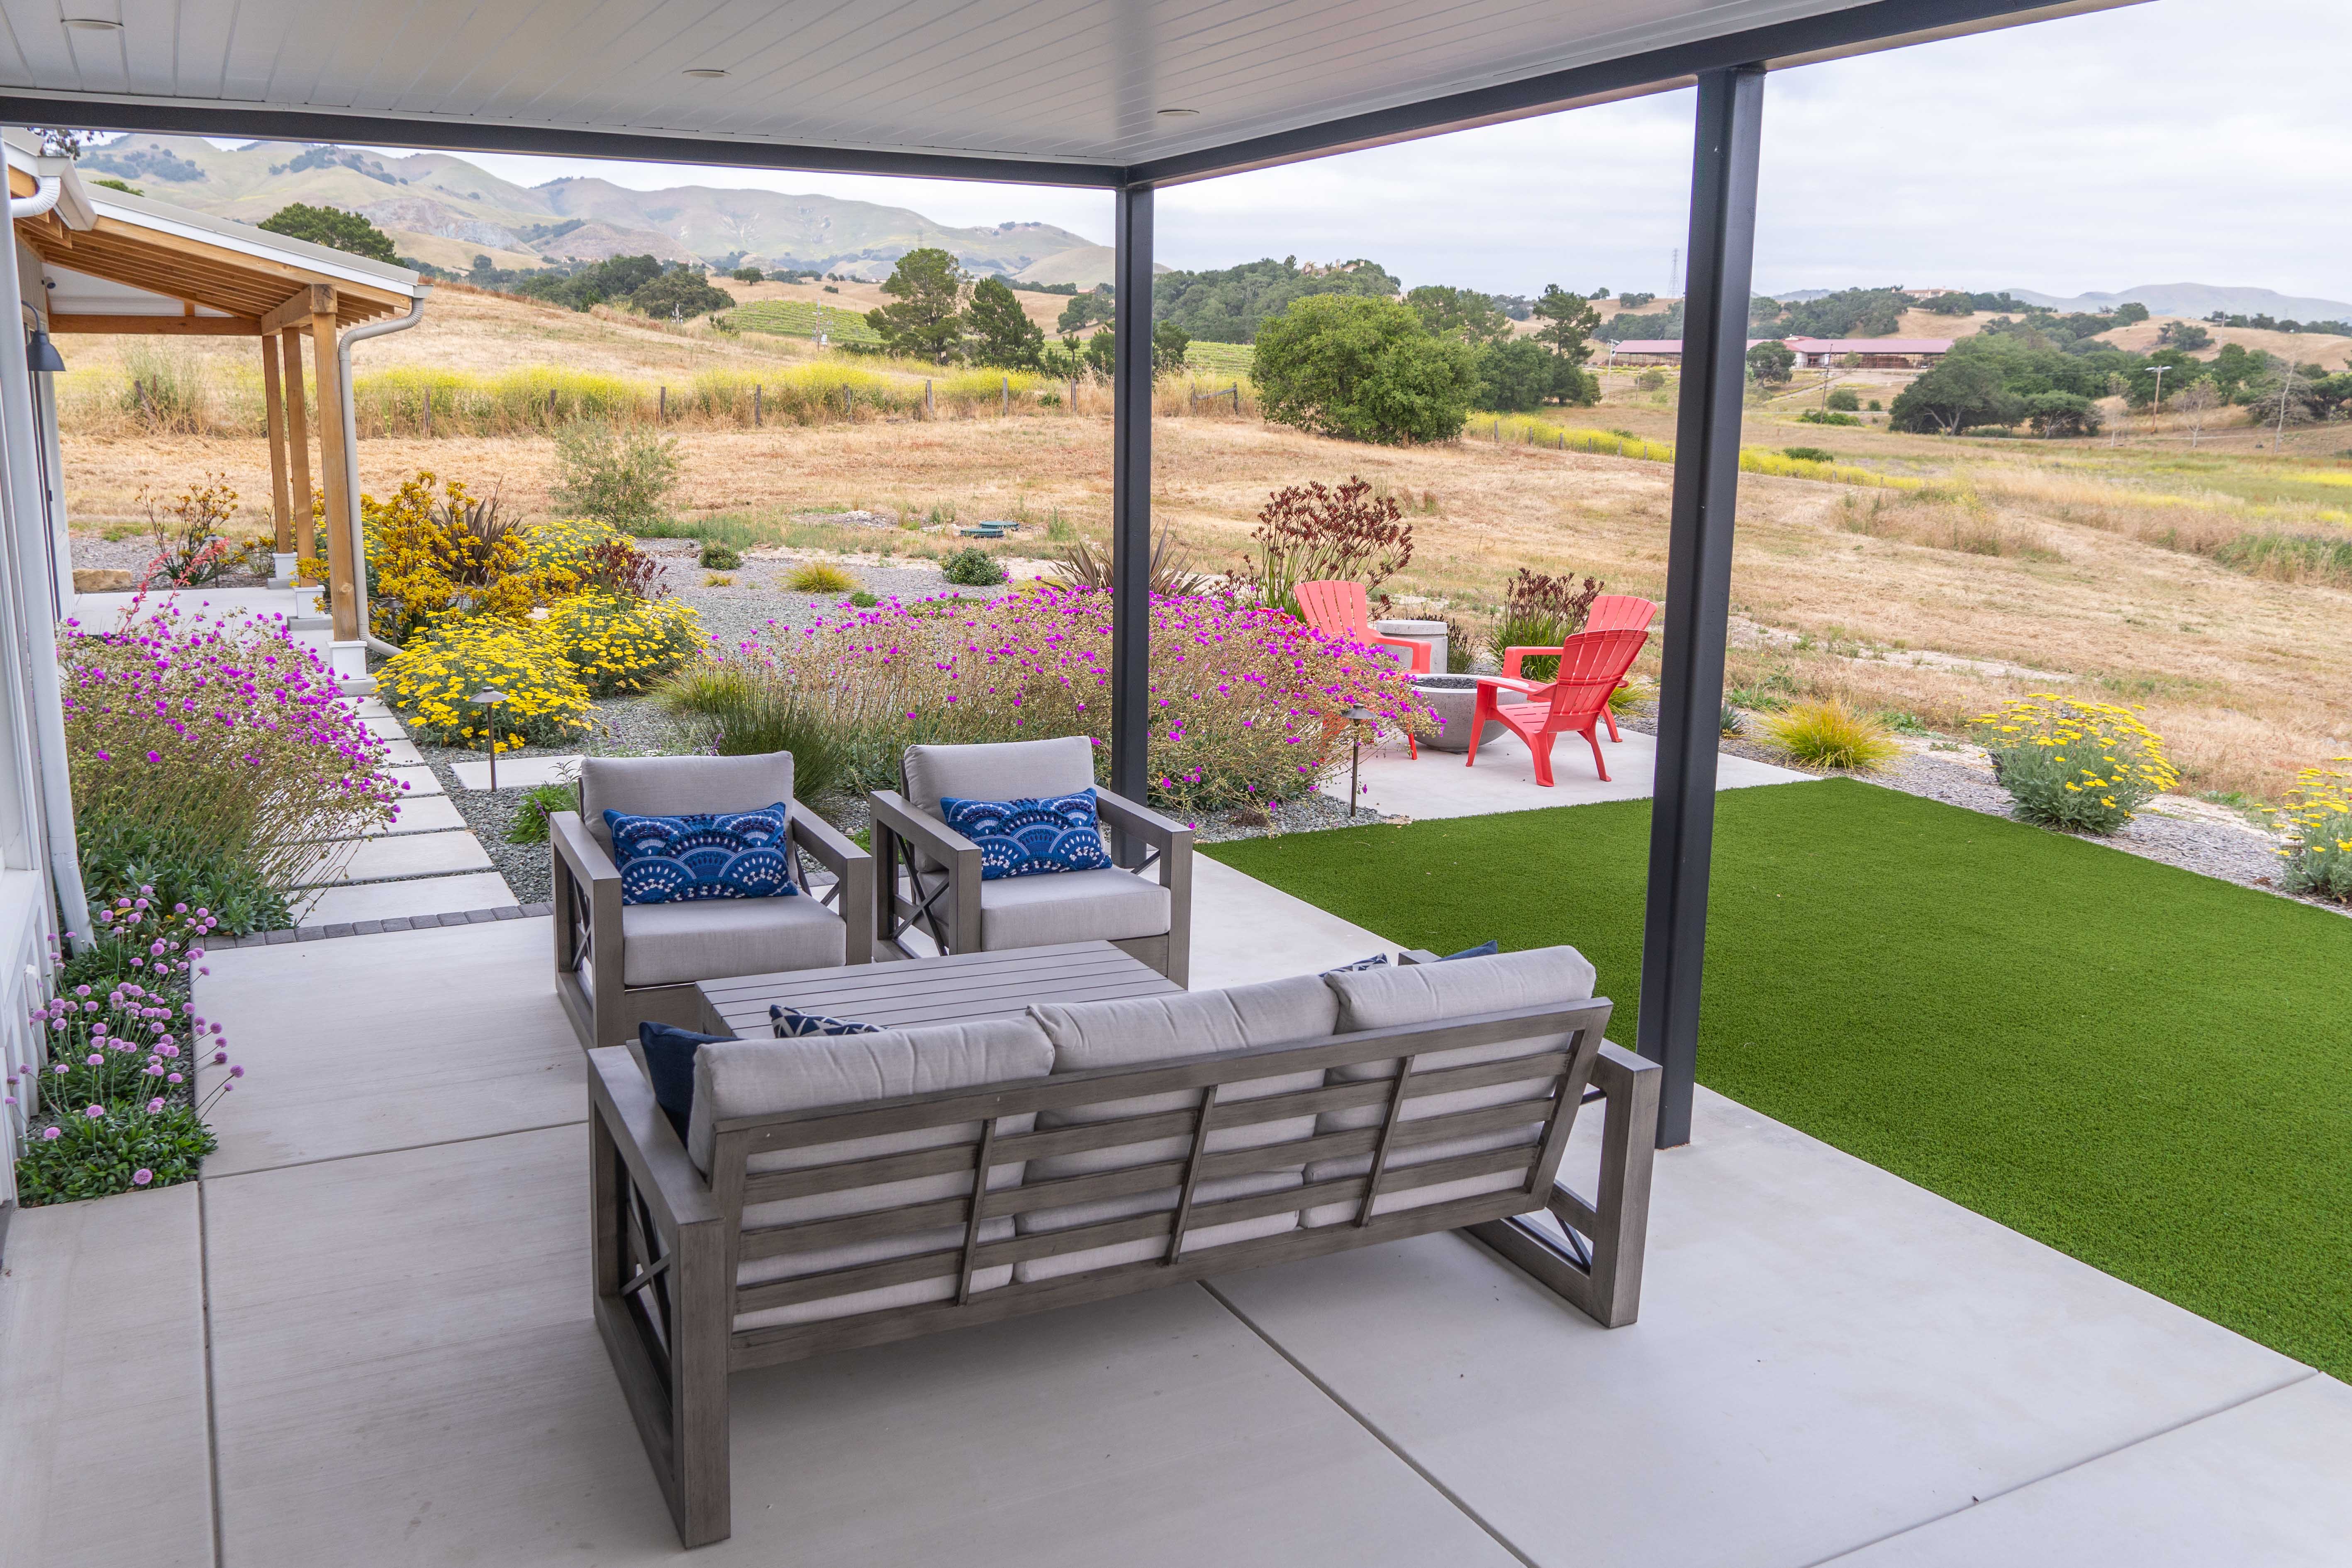 San Luis Obispo residential landscape design build Madrone